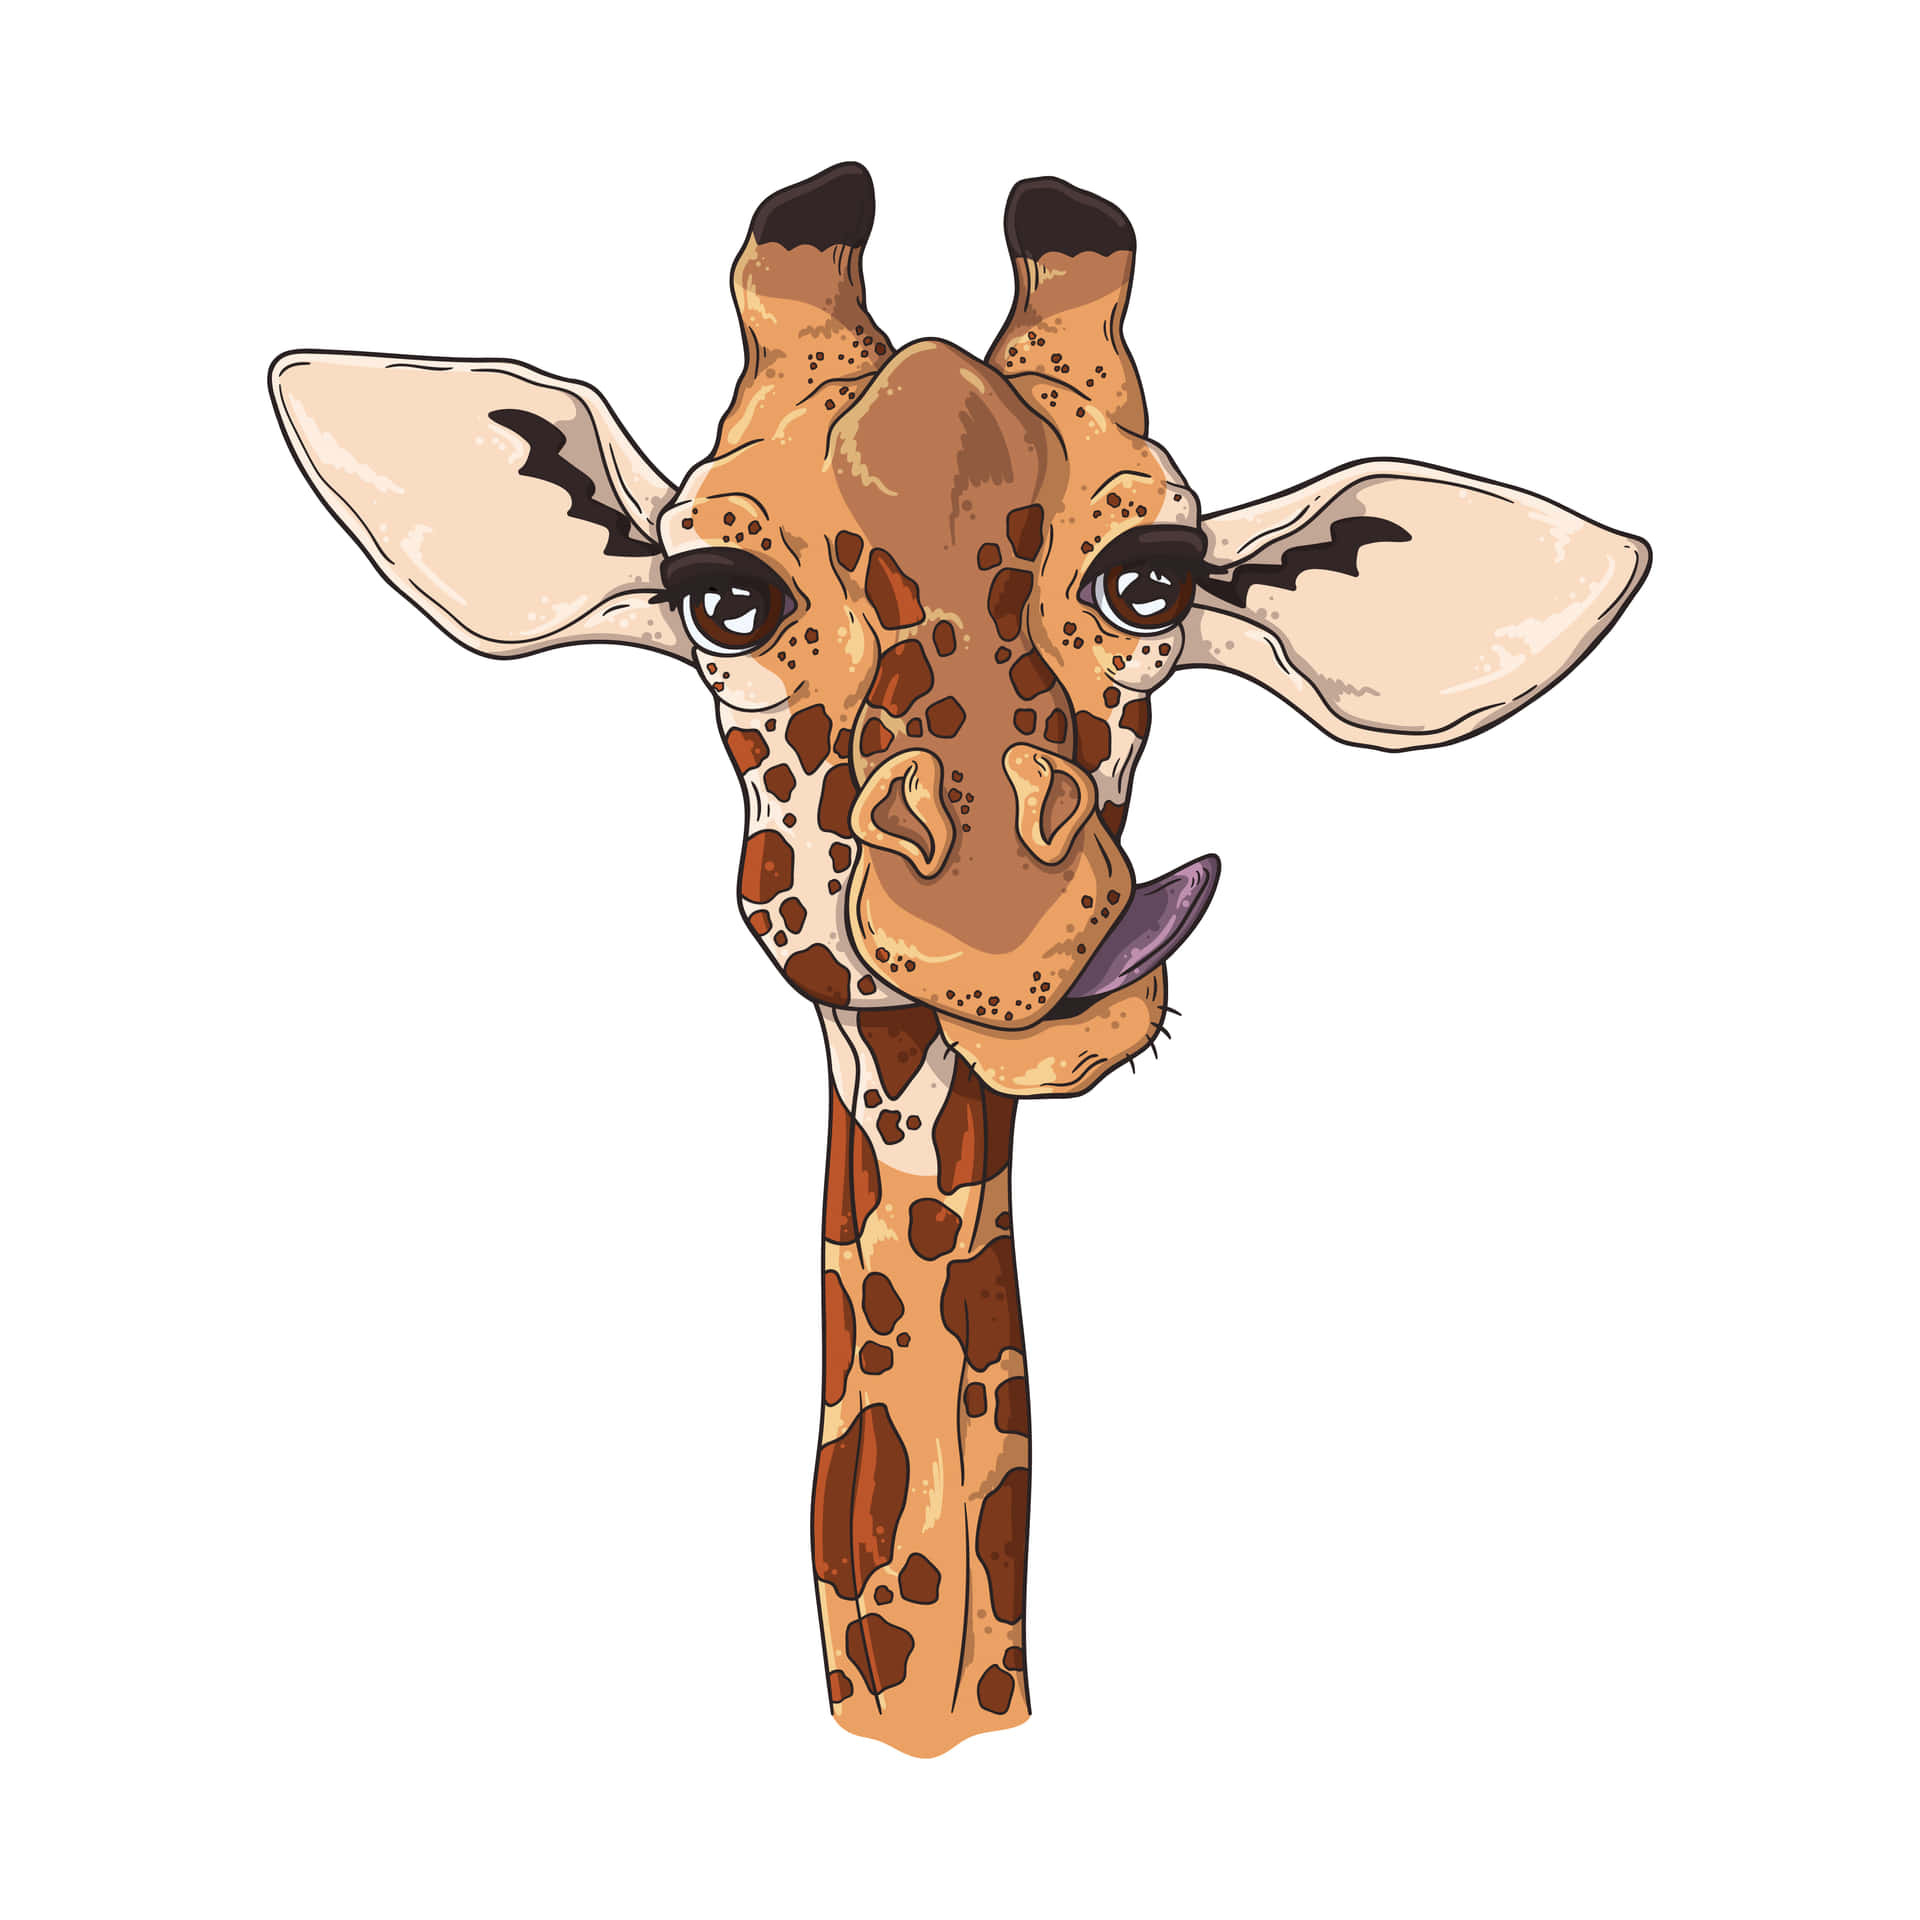 Funny Giraffe Digital Art Picture